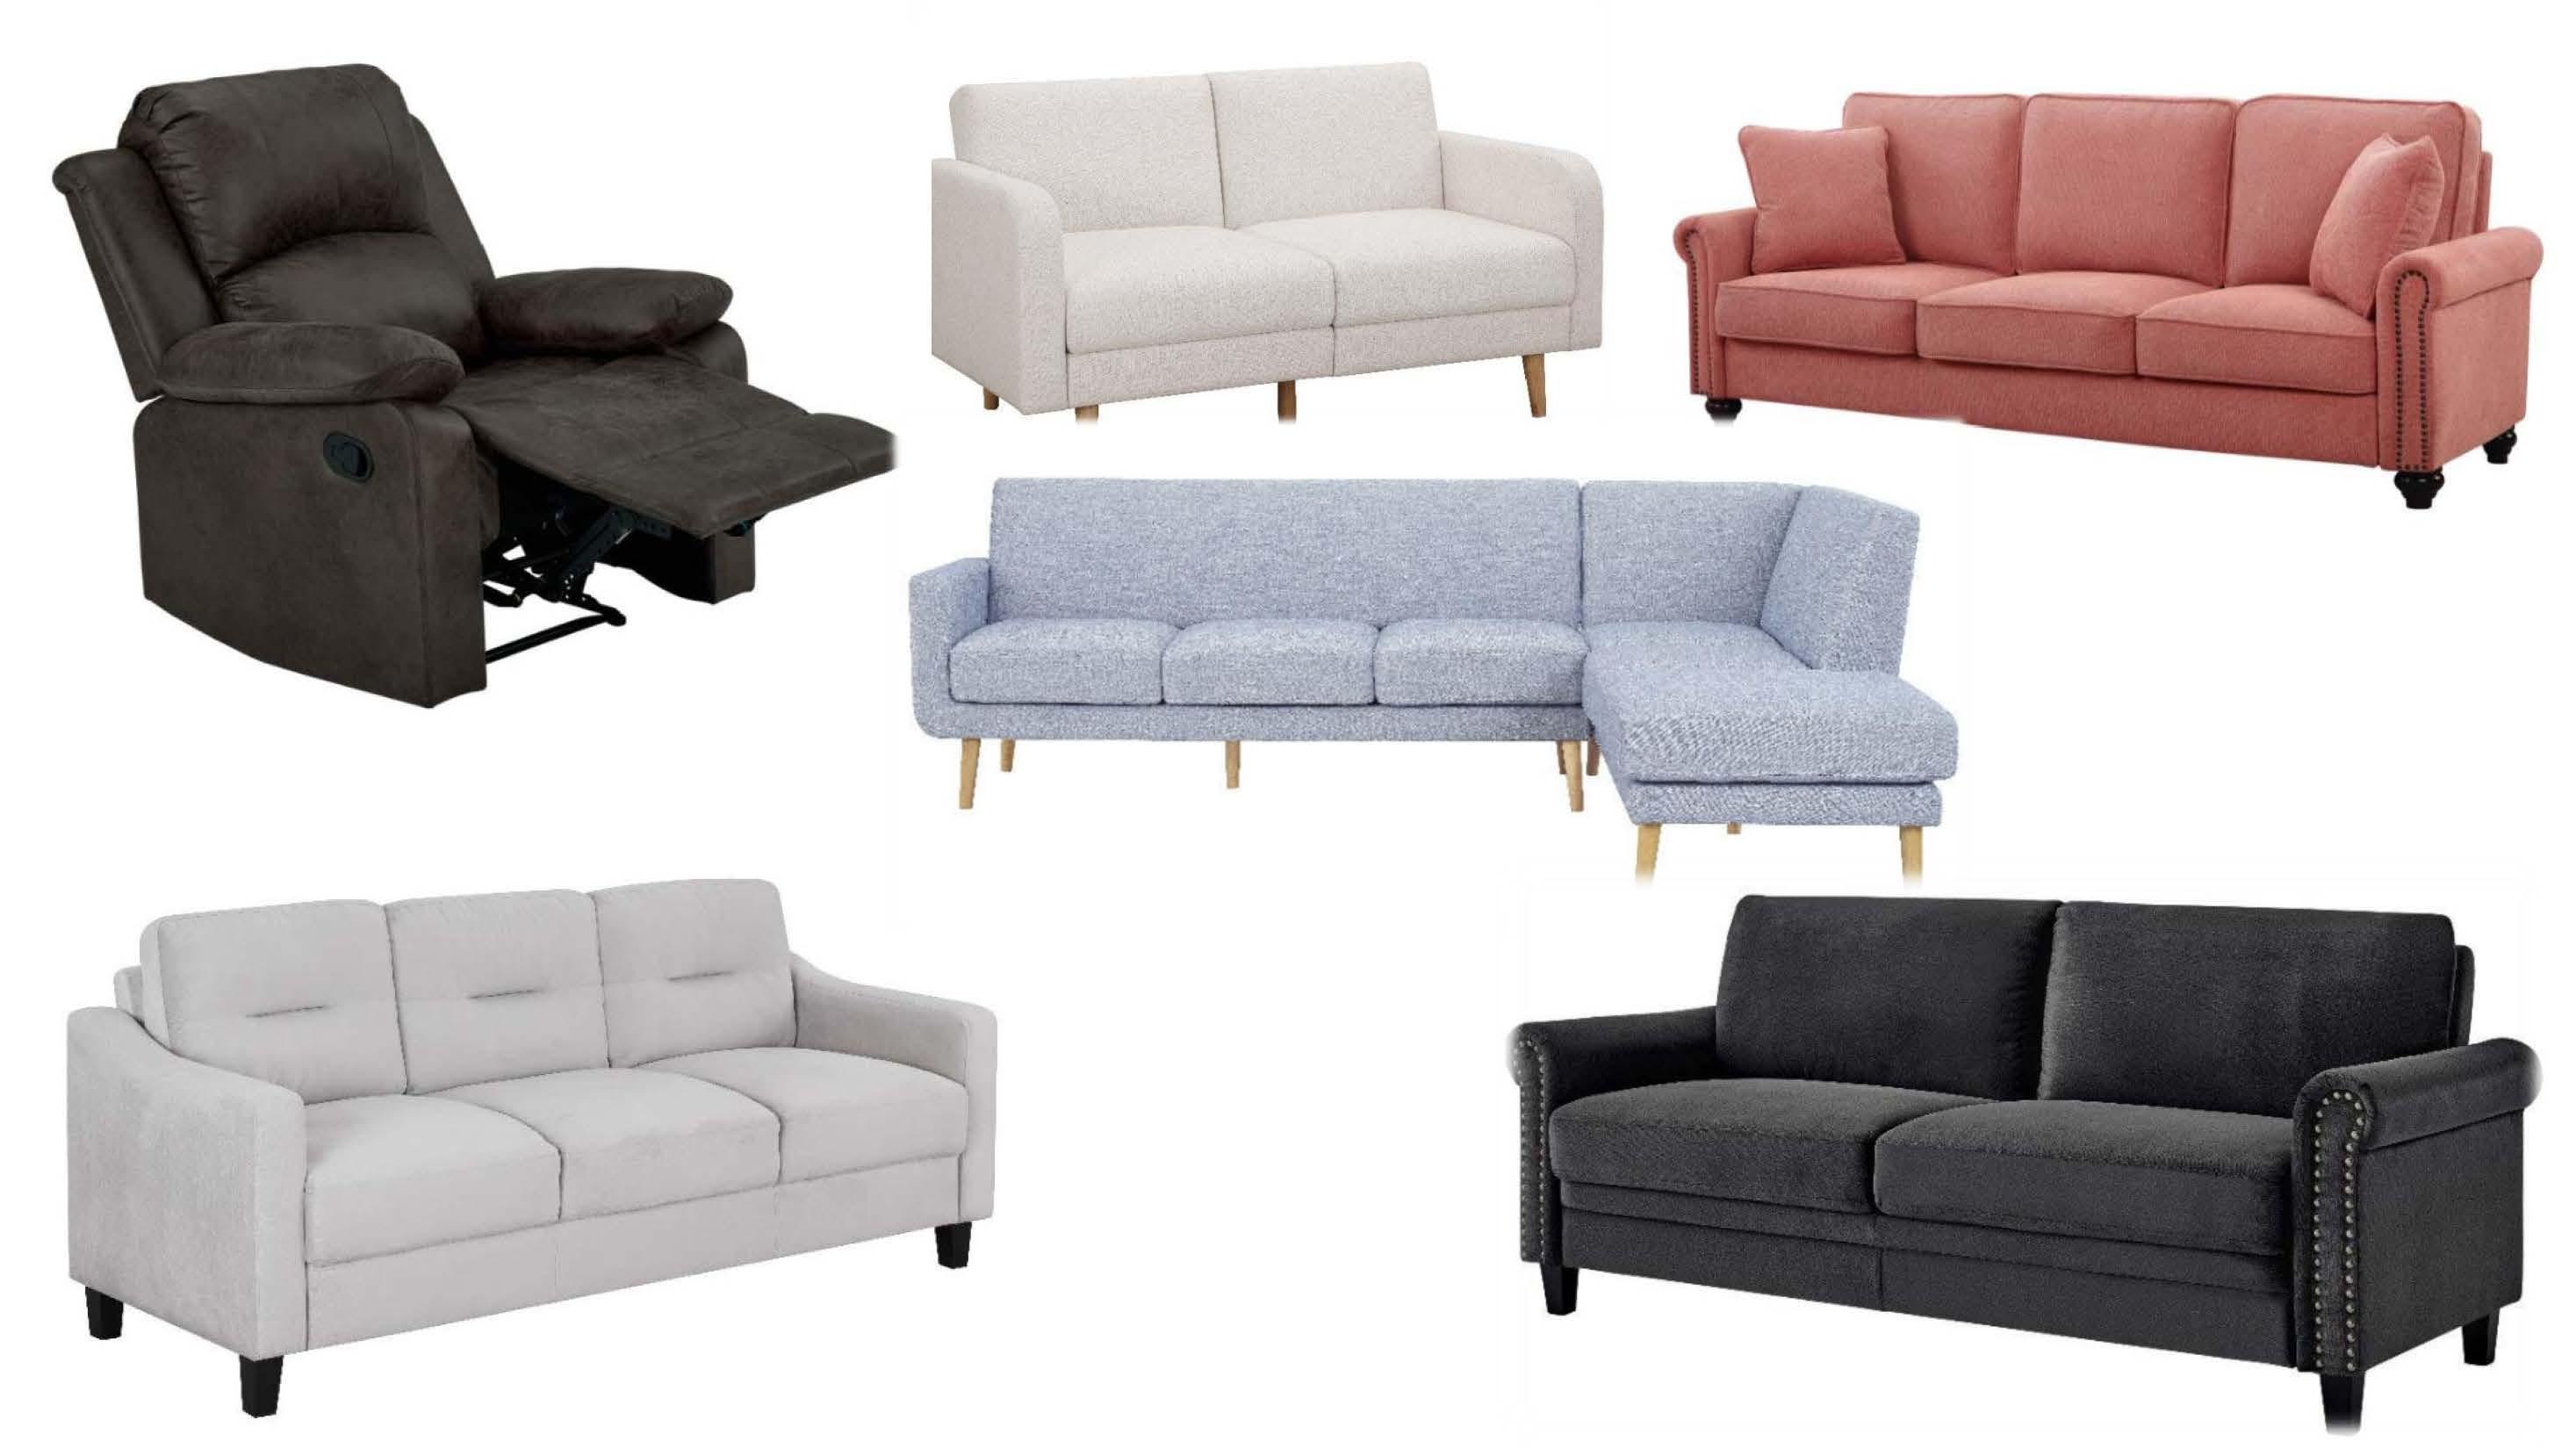 KaiRui Furniture: Your Gateway to Quality Furniture Production